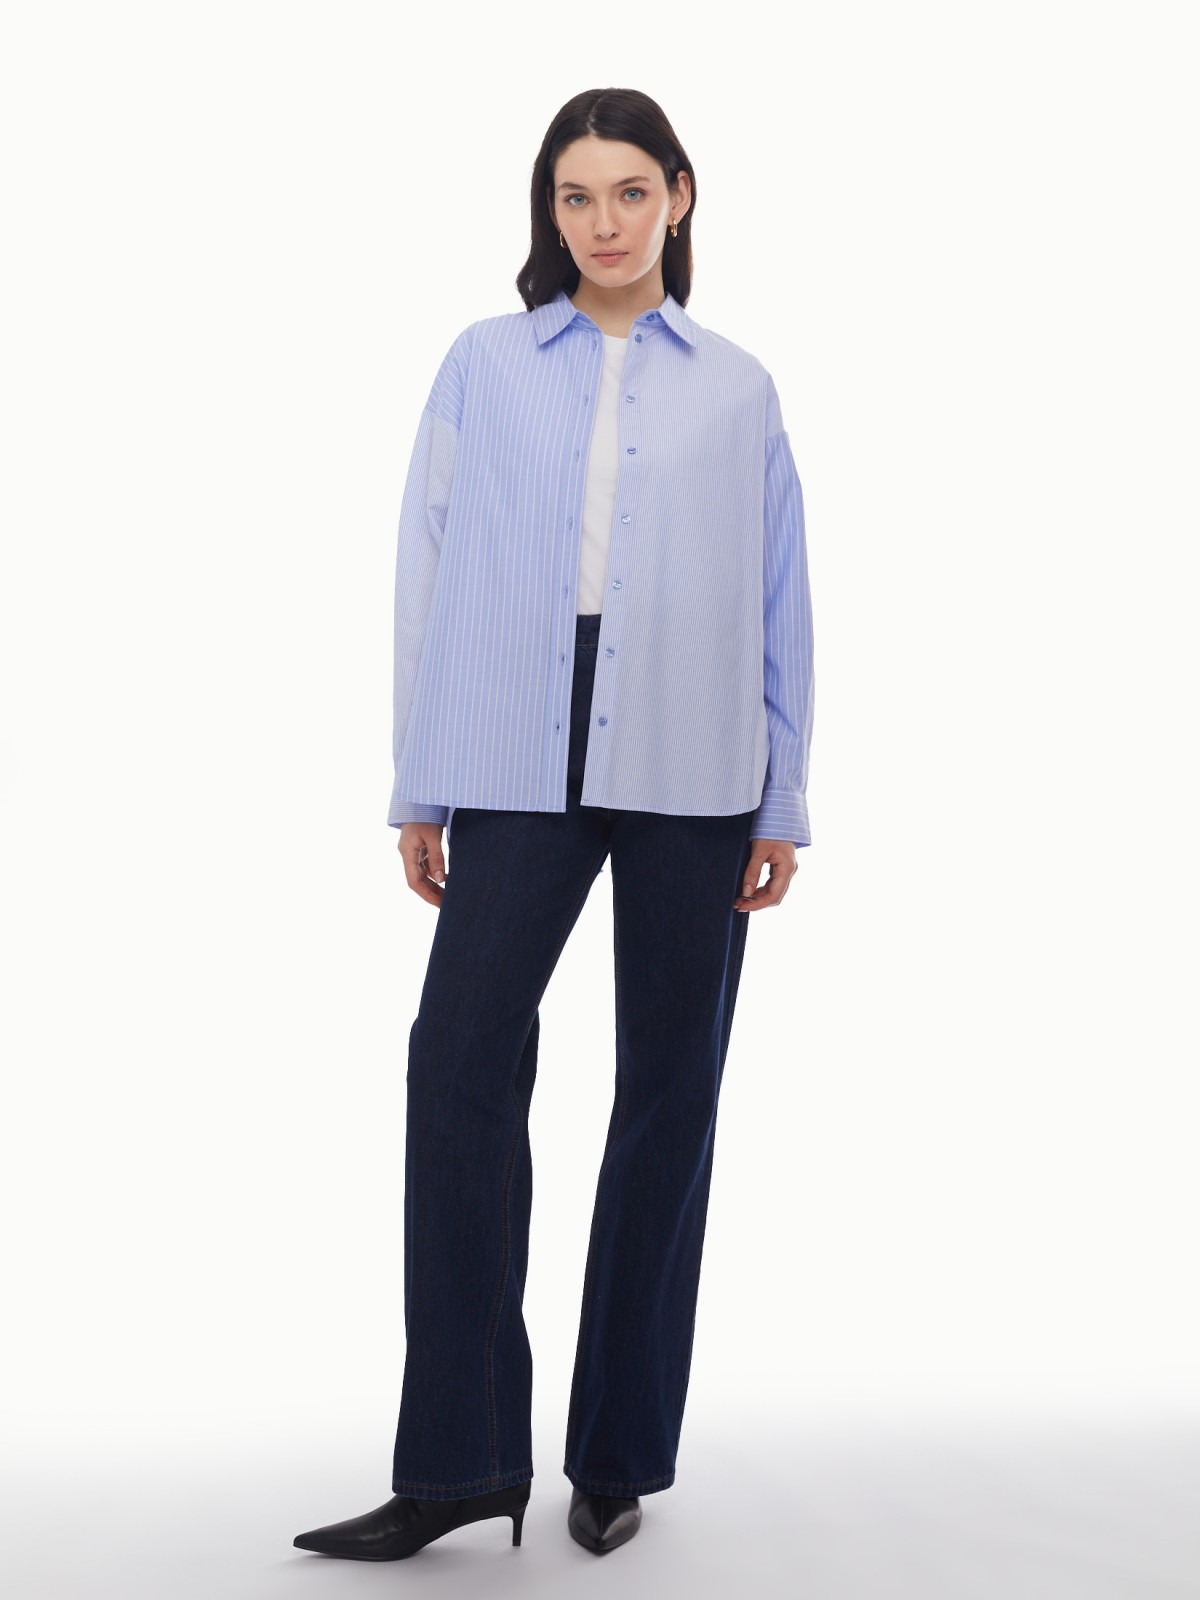 Рубашка оверсайз силуэта с узором в полоску zolla 024131159342, цвет светло-голубой, размер XS - фото 3